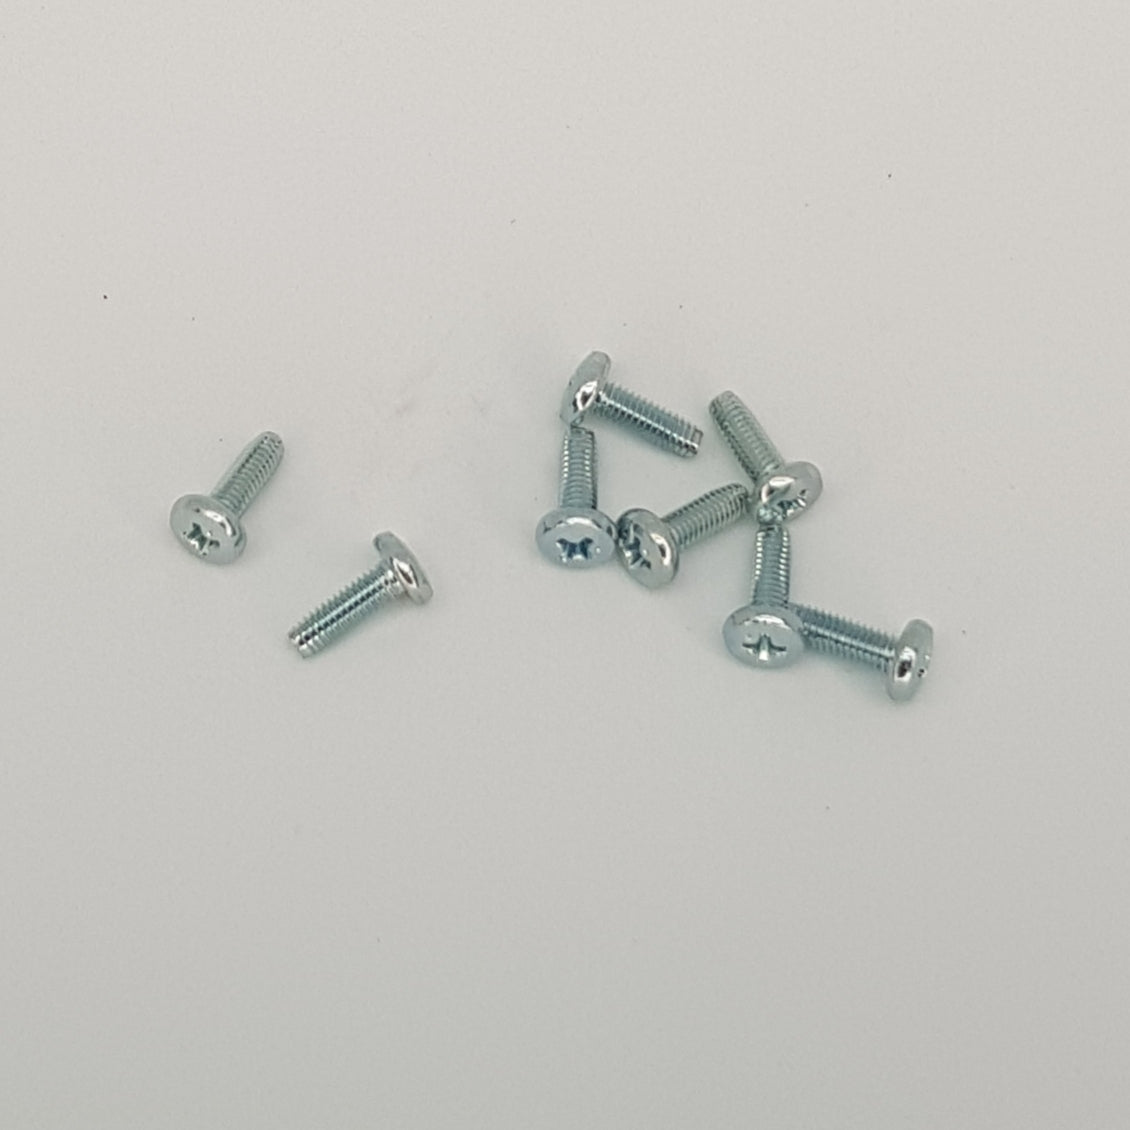 Sanwa/Seimitsu Joystick mounting screws (suit no mounting plate)